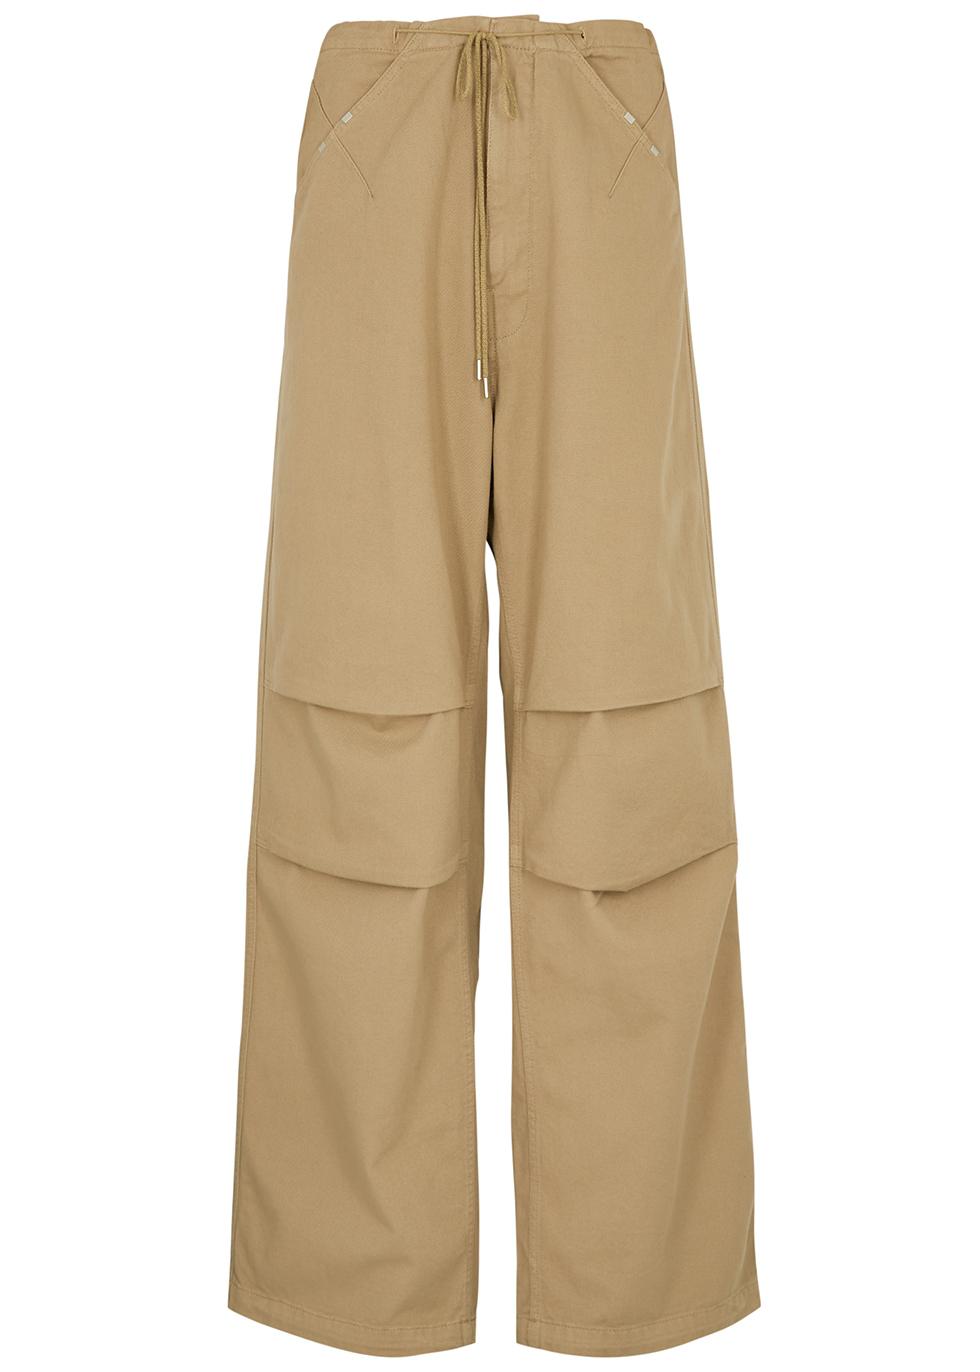 Daisy camel wide-leg cotton trousers by DARKPARK